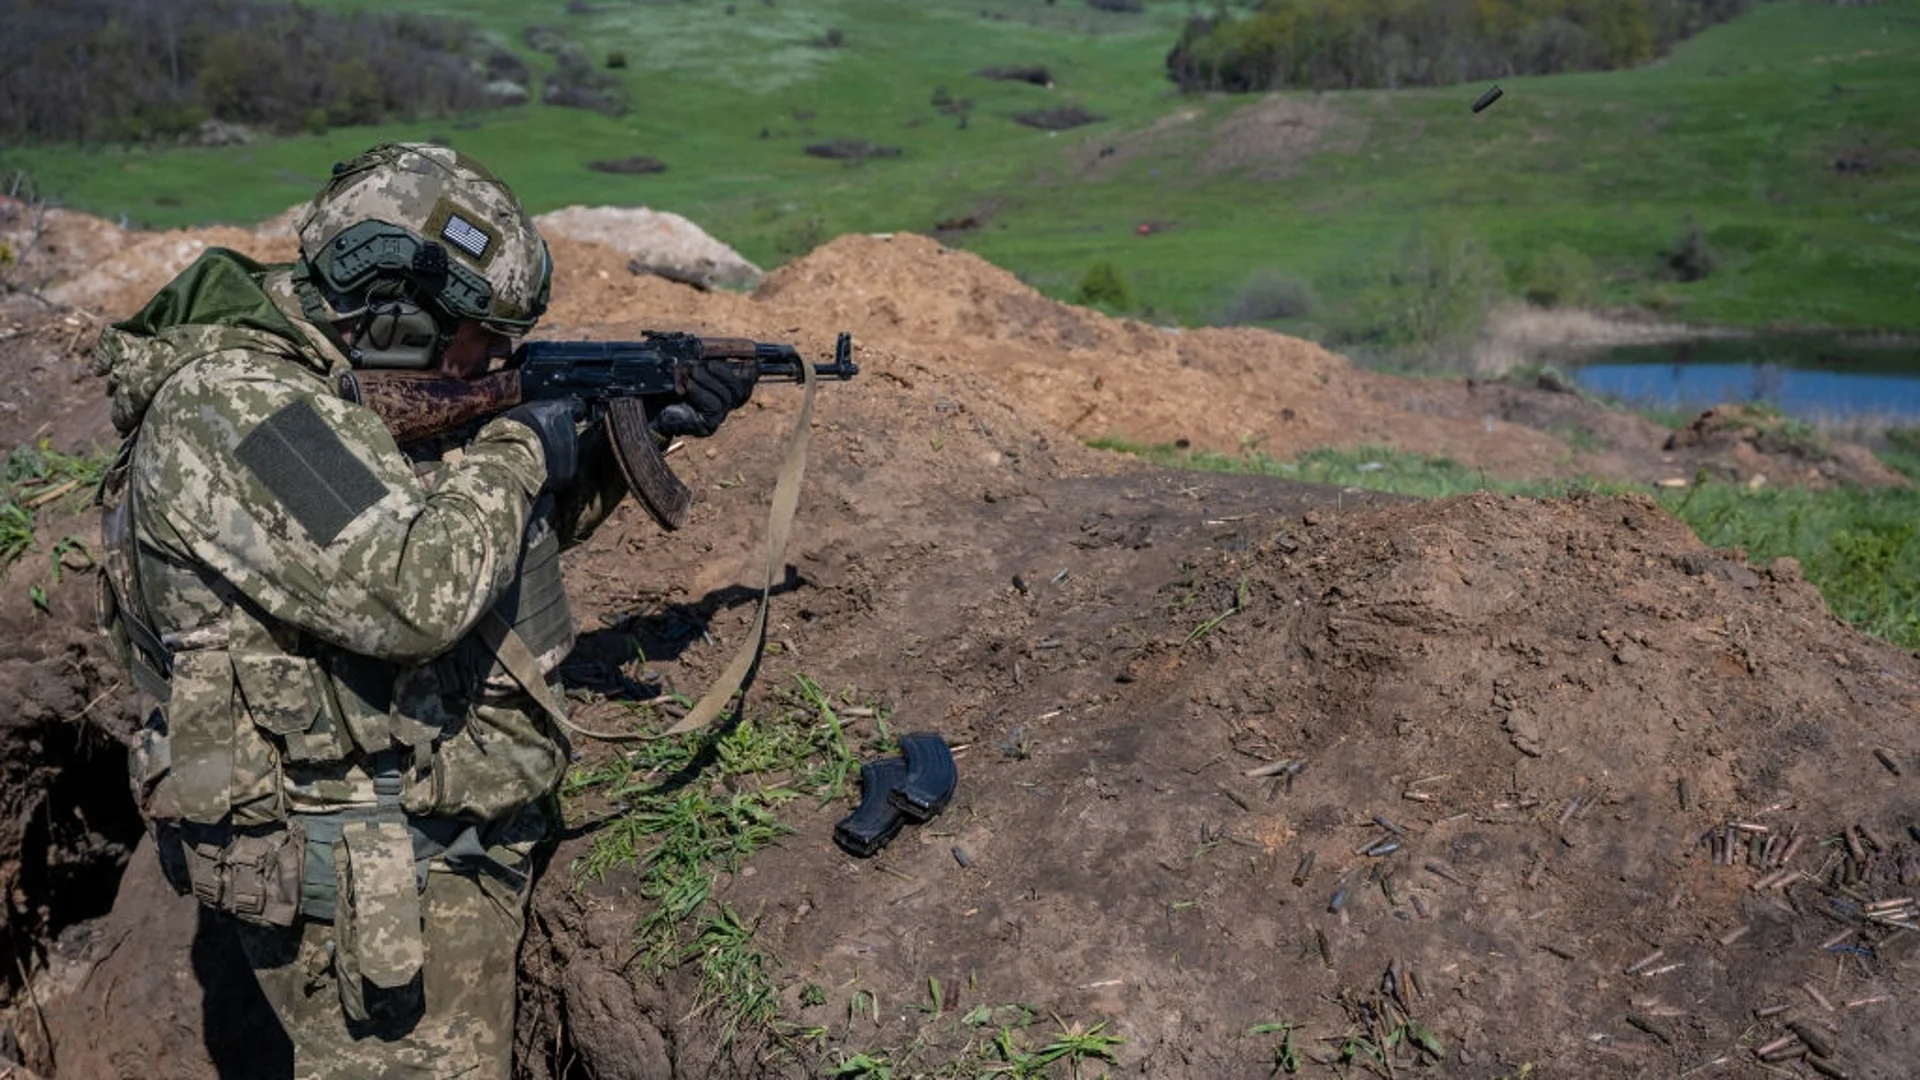 Пак разстреляни предали се украински войници: Нов случай на руско зверство (ВИДЕО, 18+)